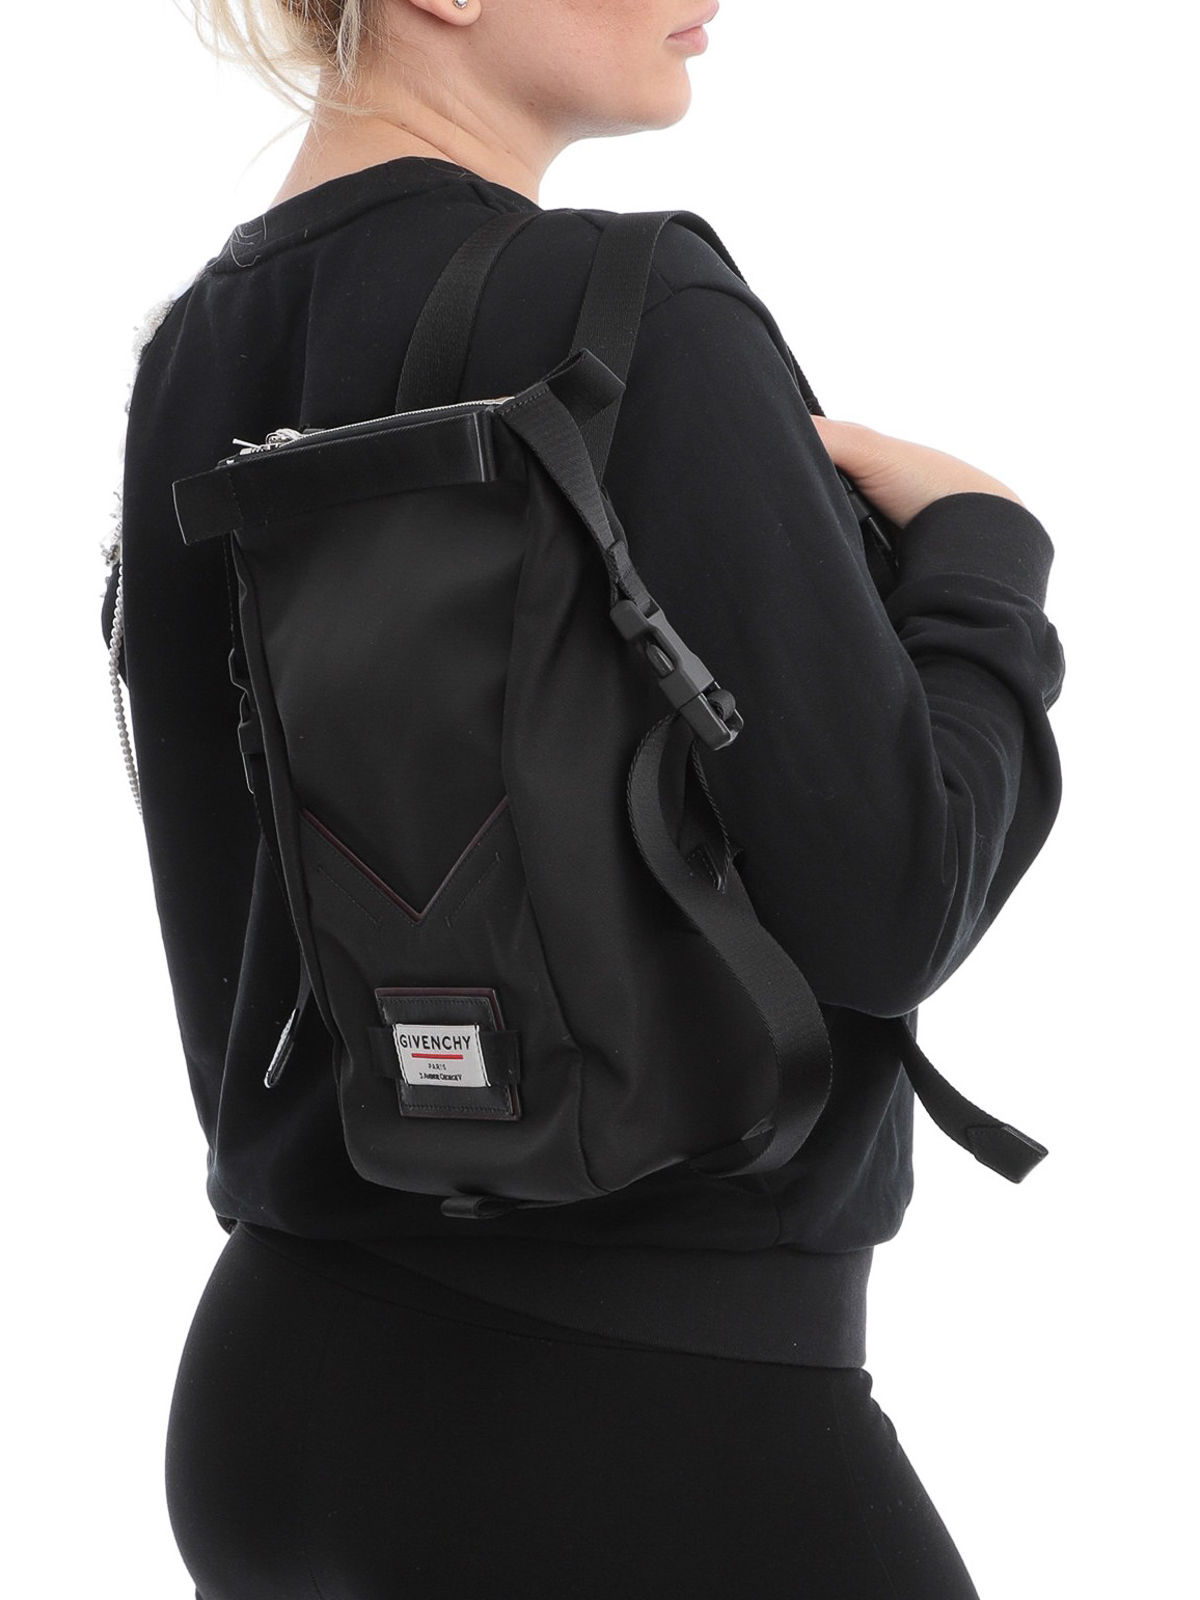 givenchy backpack mini